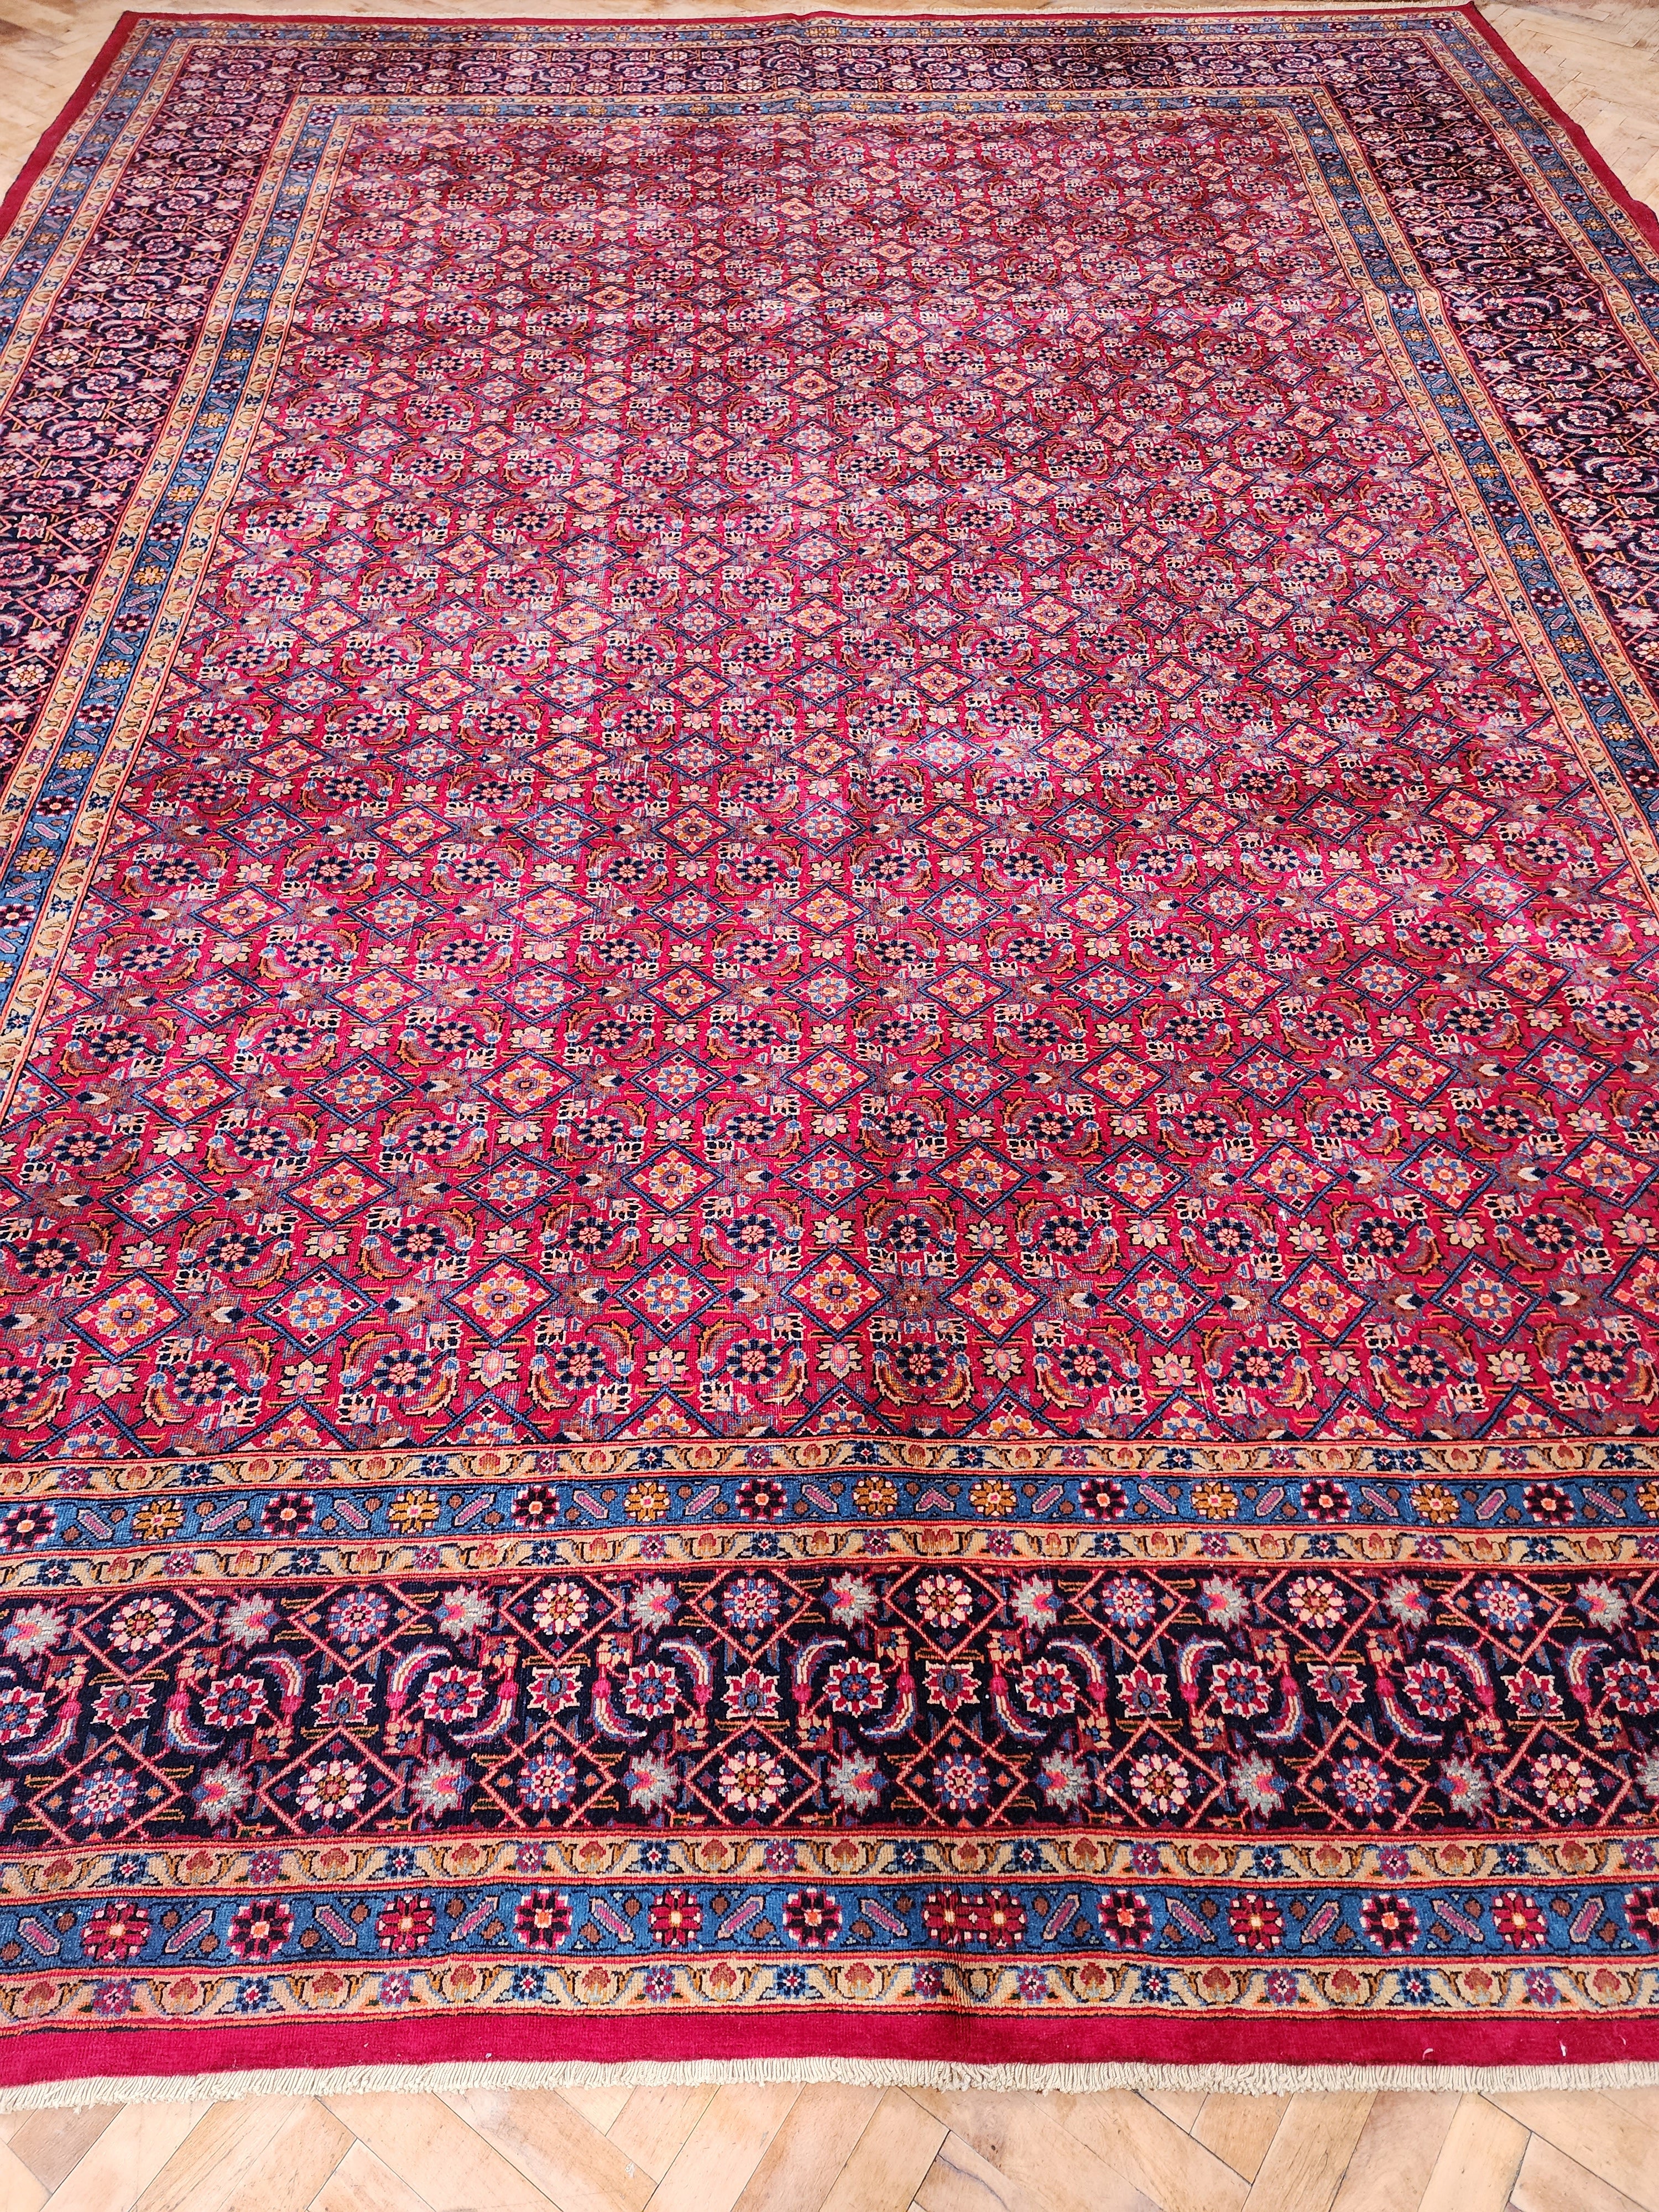 Red and Blue Persian Area Rug, 10 x 13 ft Vintage Turkish Tribal Organic Wool Rug, Recycled Oriental Design Rustic Floor Rug